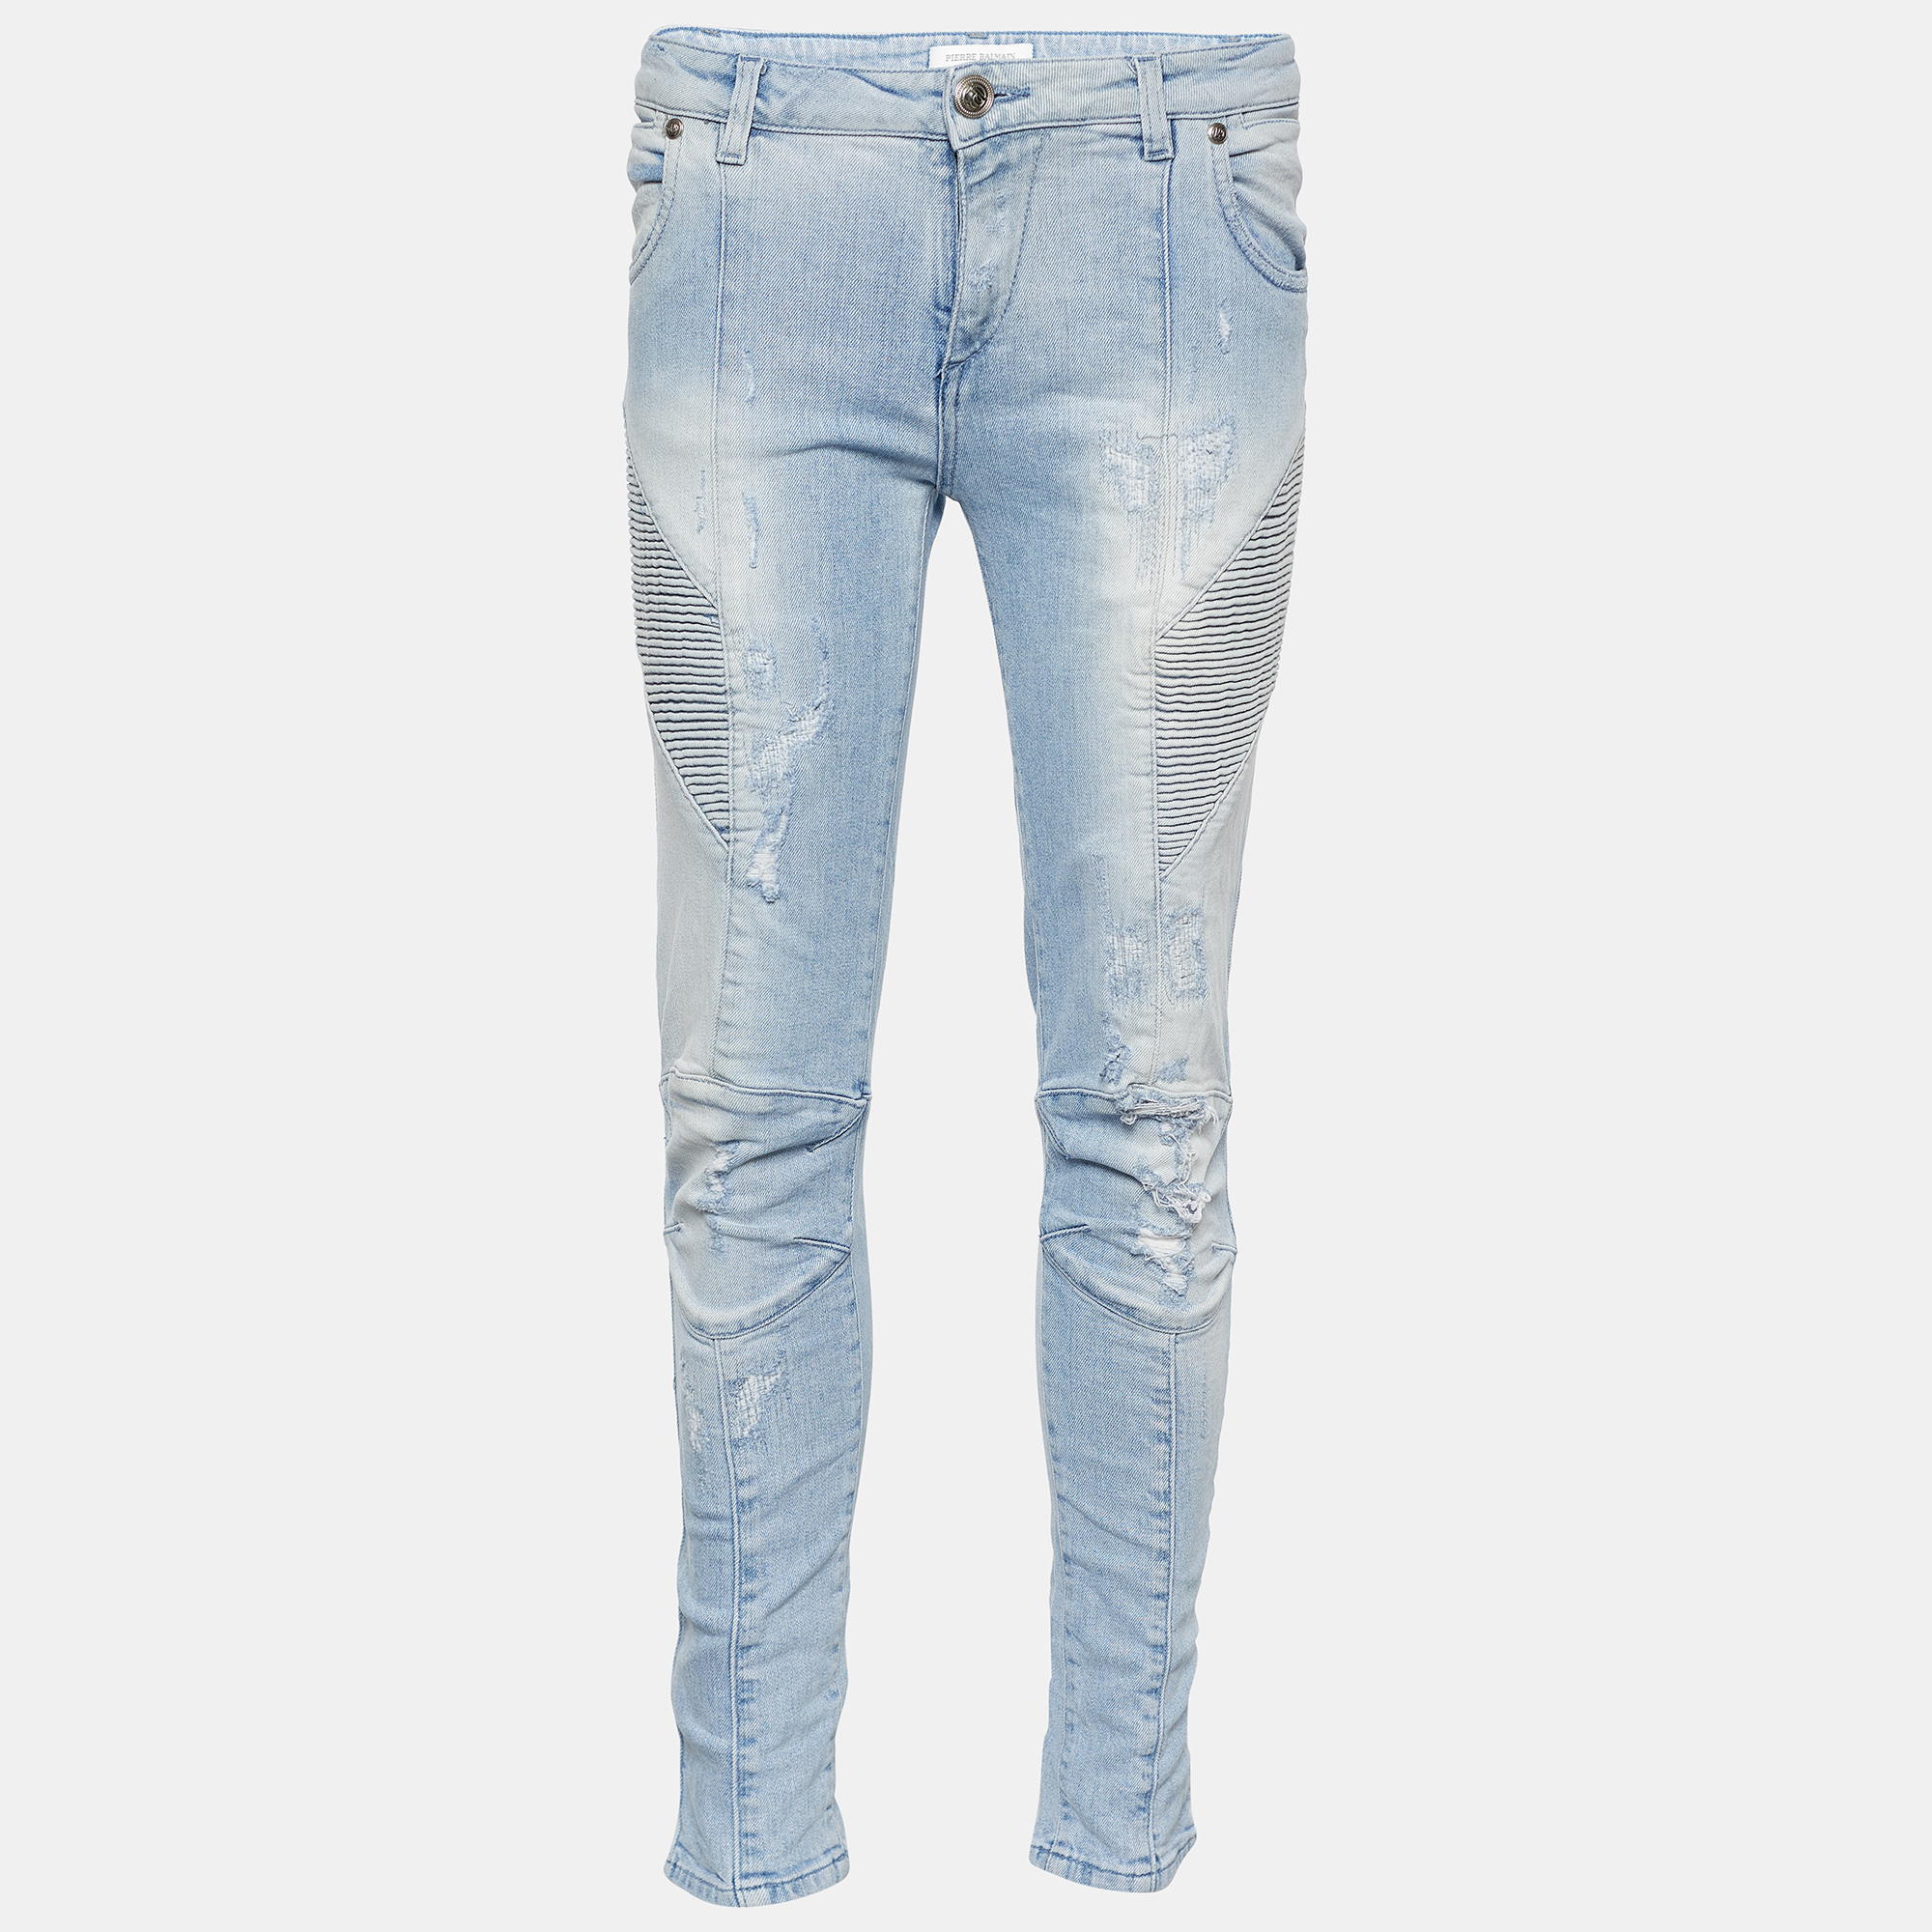 Pierre Balmain Blue Denim Distressed Jeans M/Waist 28